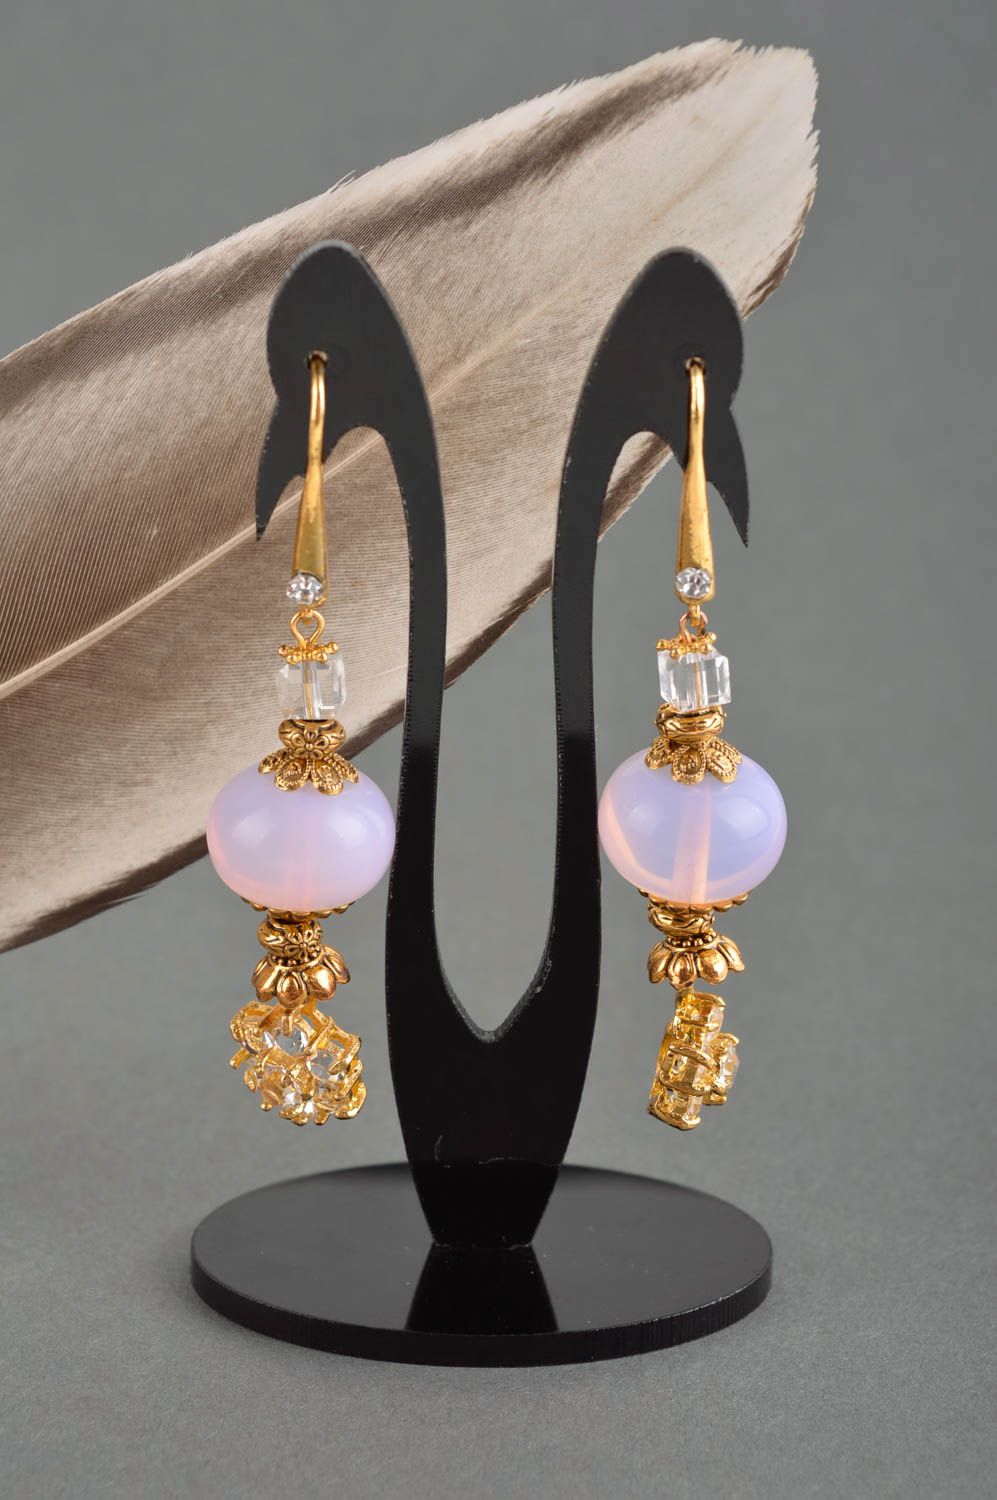 Handmade earrings designer jewelry handmade jewellery earrings for women photo 1